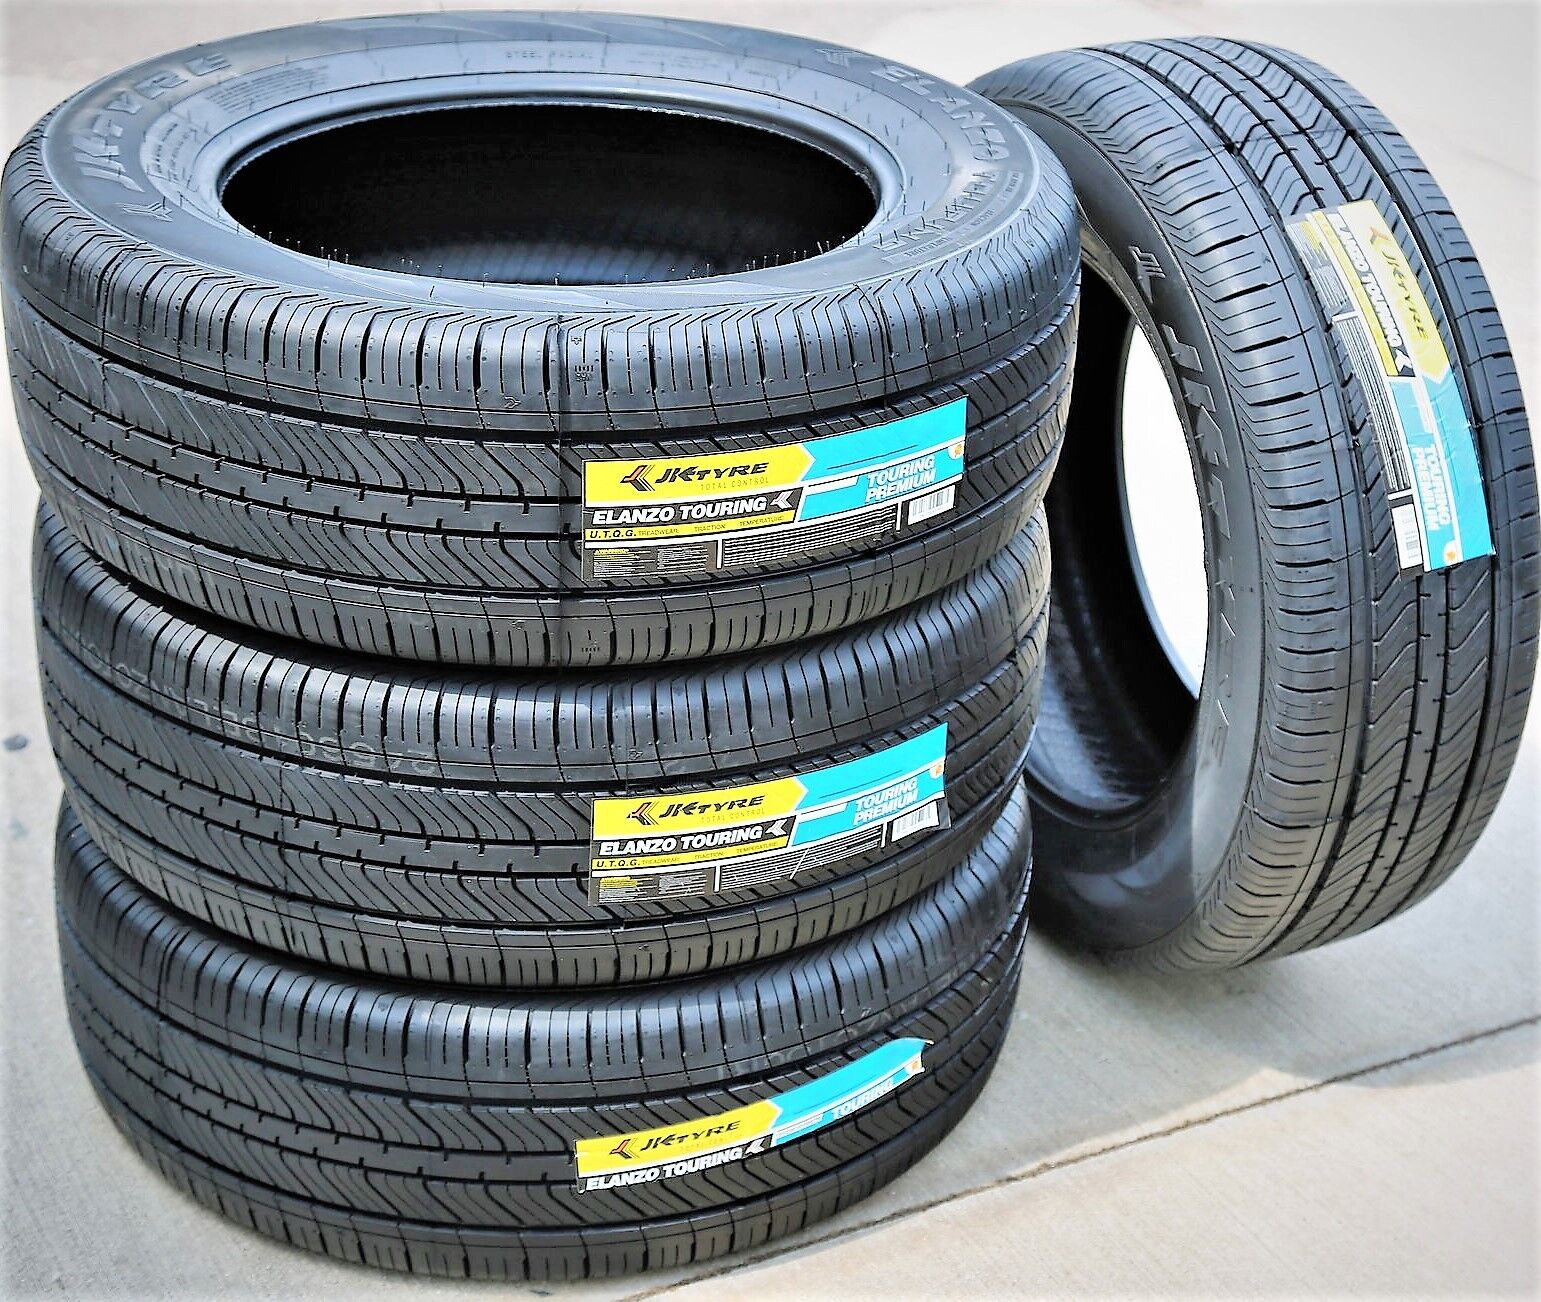 4 Tires JK Tyre Elanzo Touring 215/70R16 99T AS A/S All Season